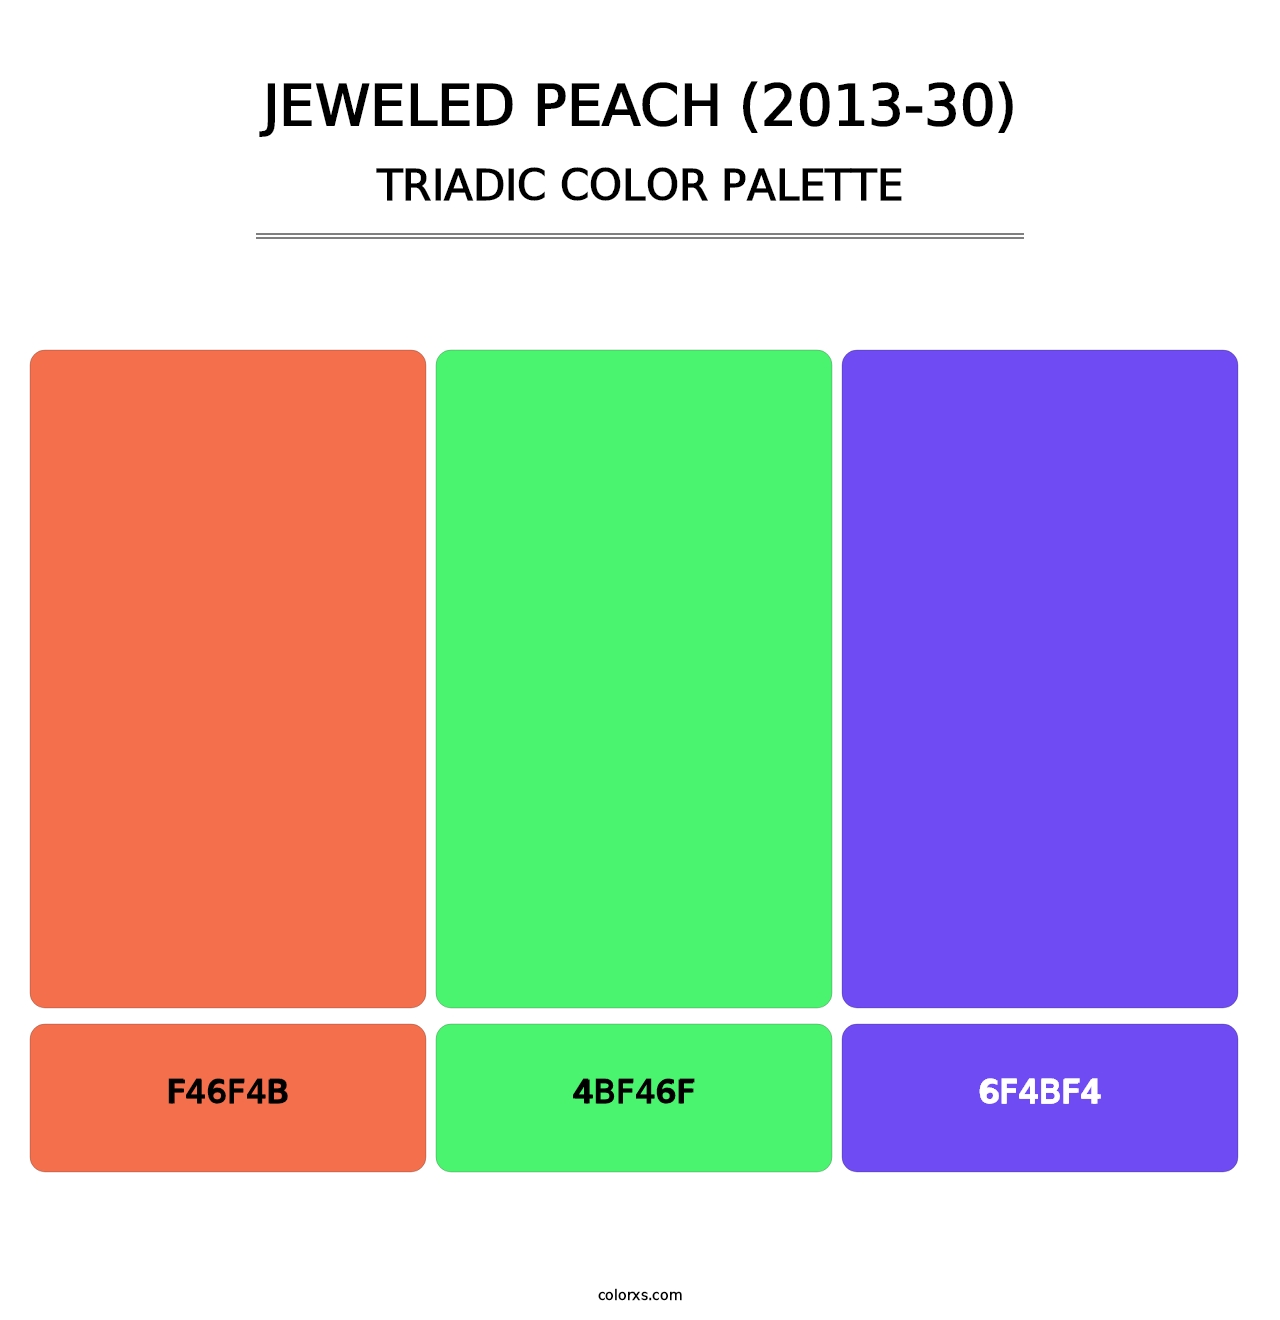 Jeweled Peach (2013-30) - Triadic Color Palette